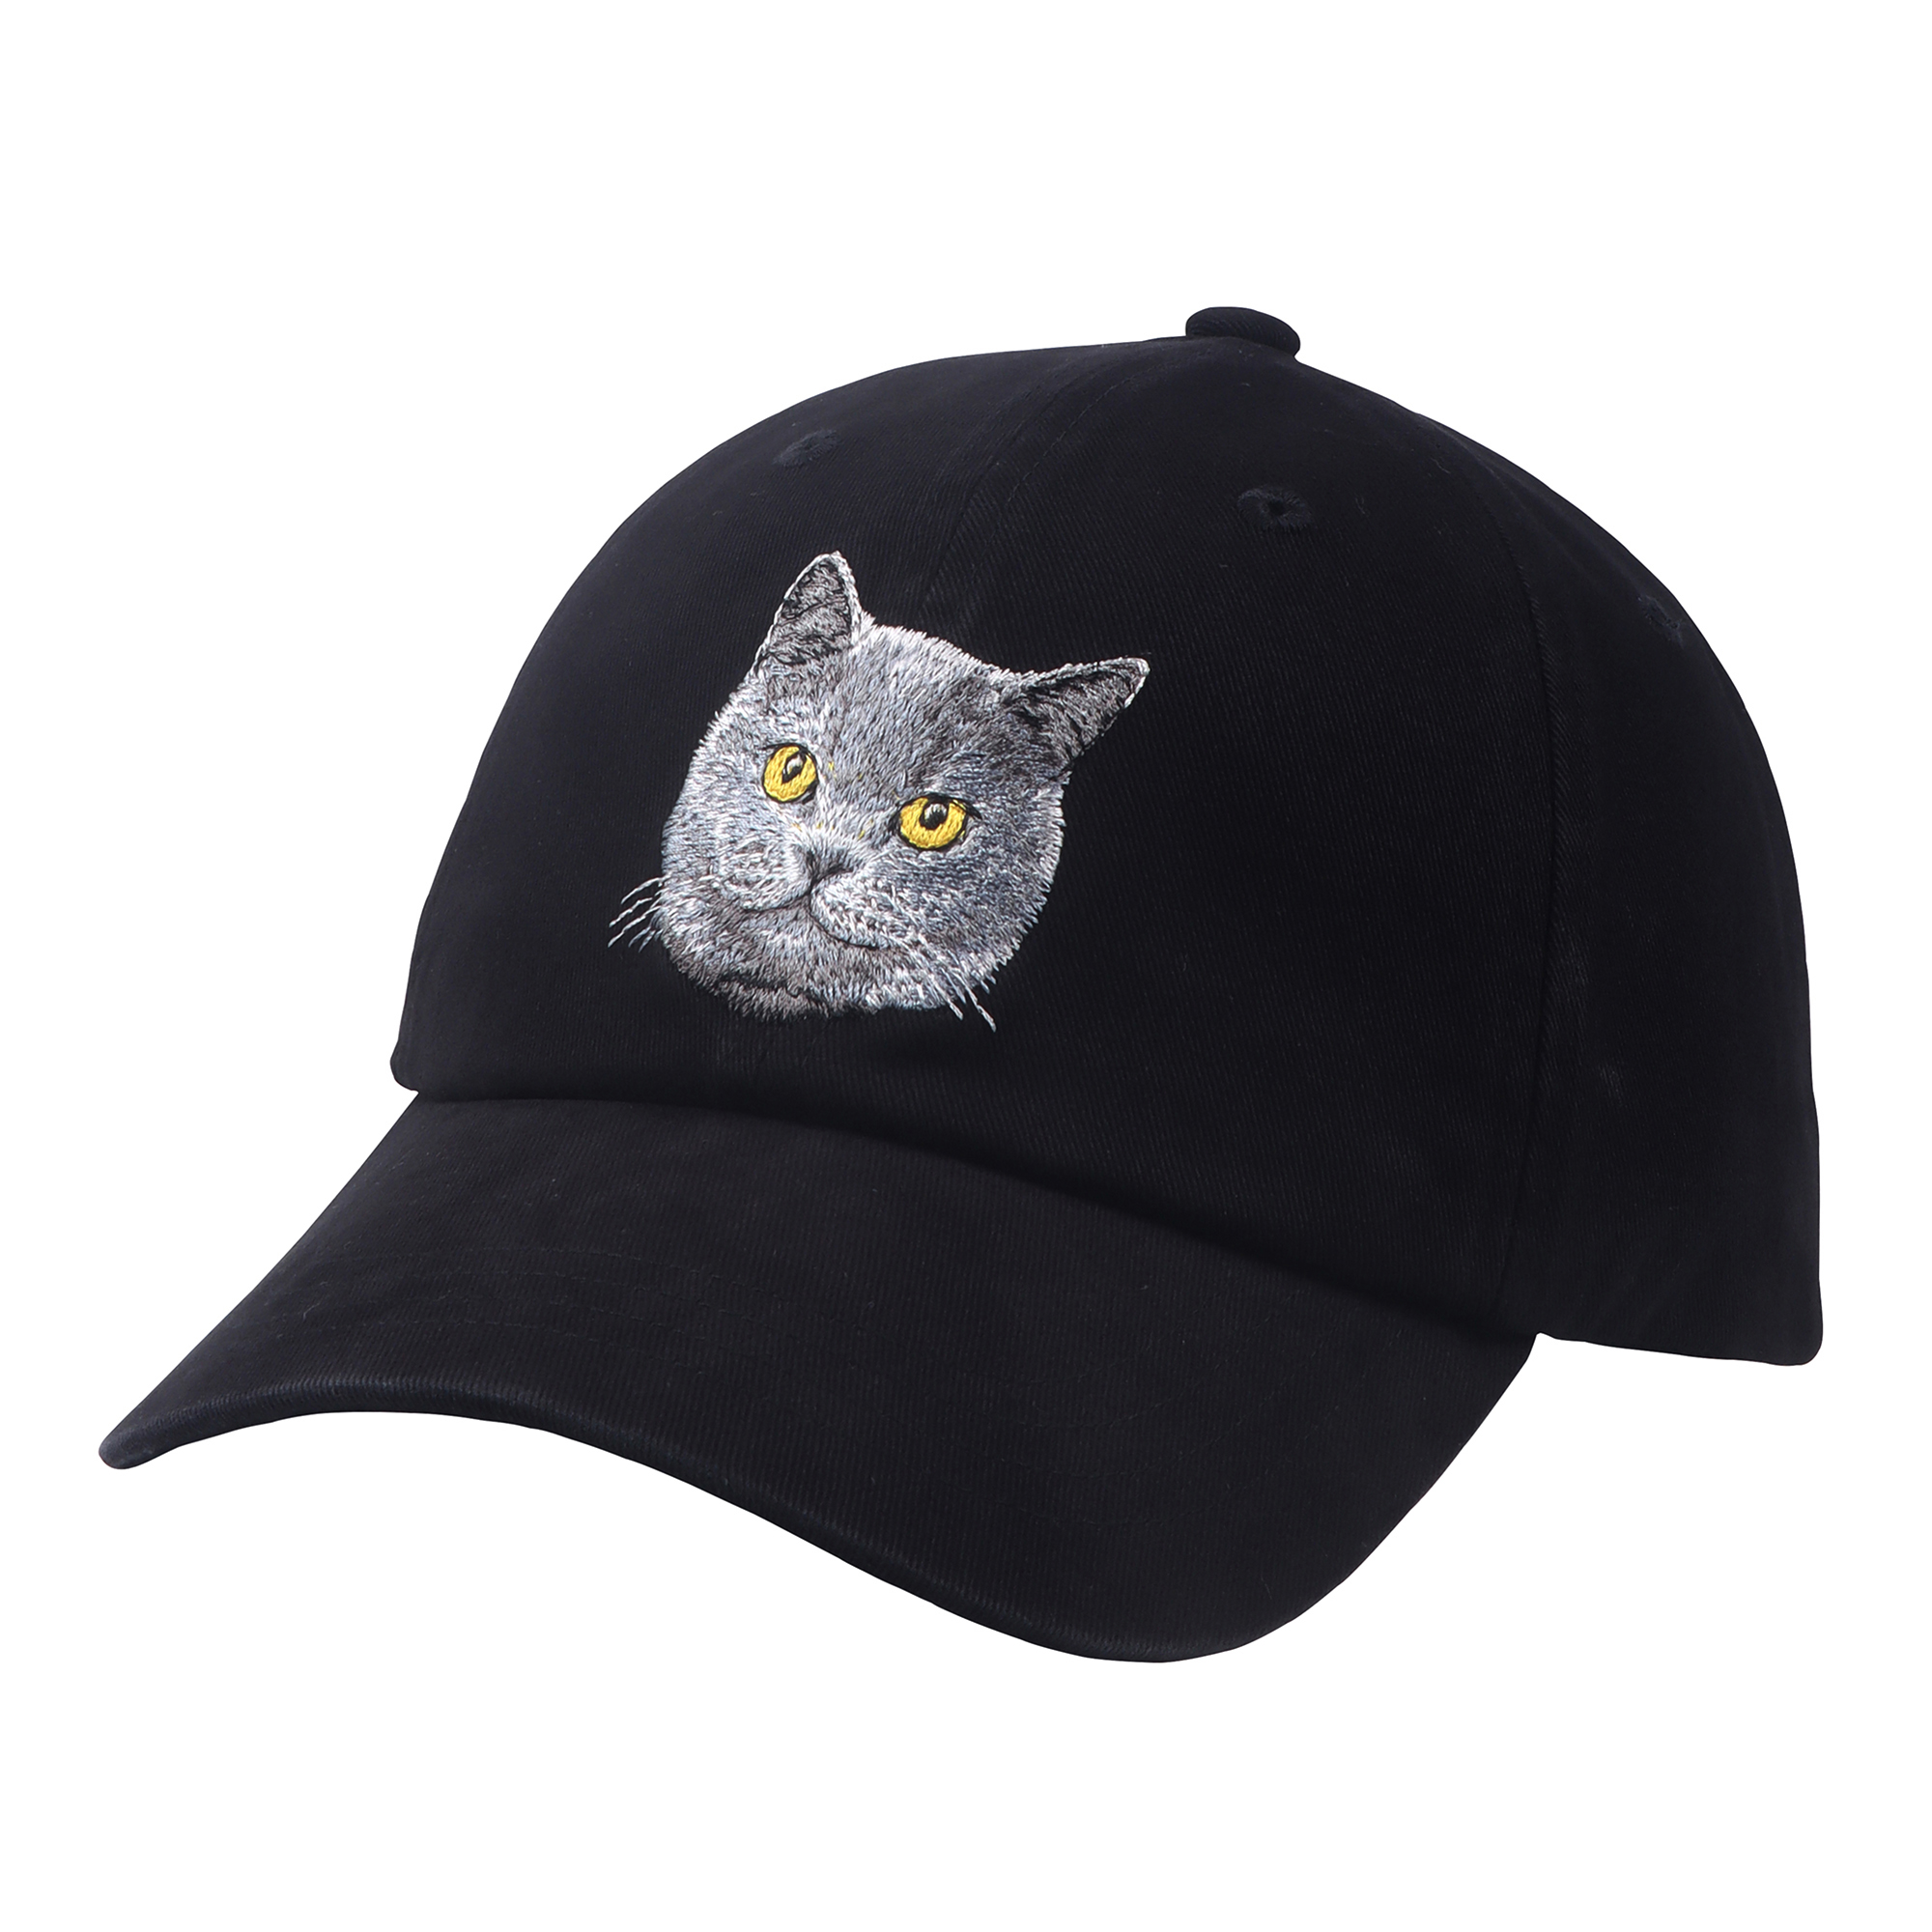 HATODM British Shorthair Cat Embroidery Baseball Cap